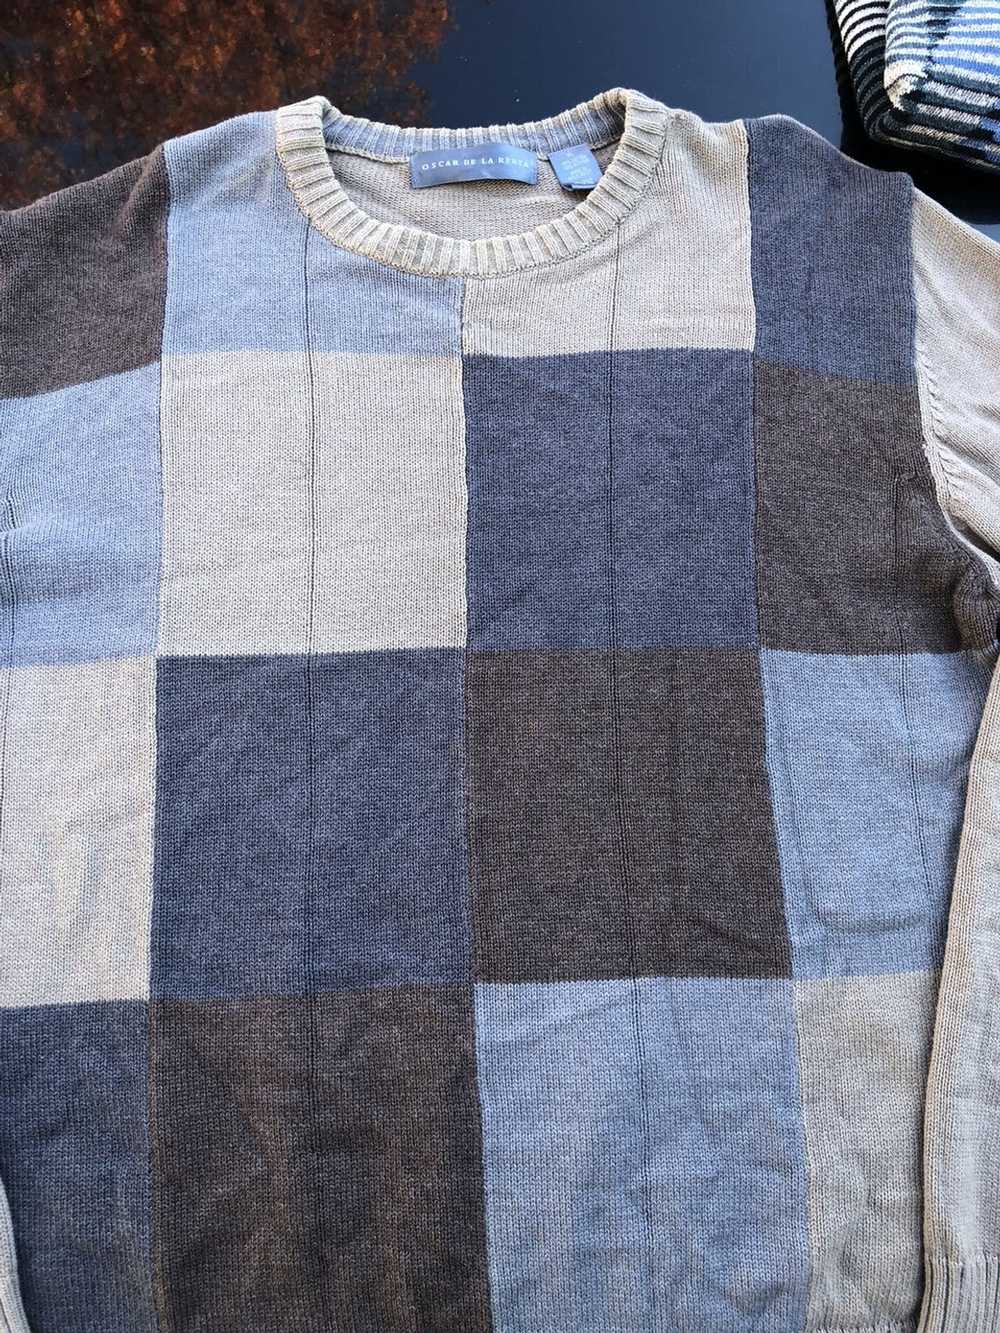 Vintage vintage beige brown and grey knit sweater - image 2